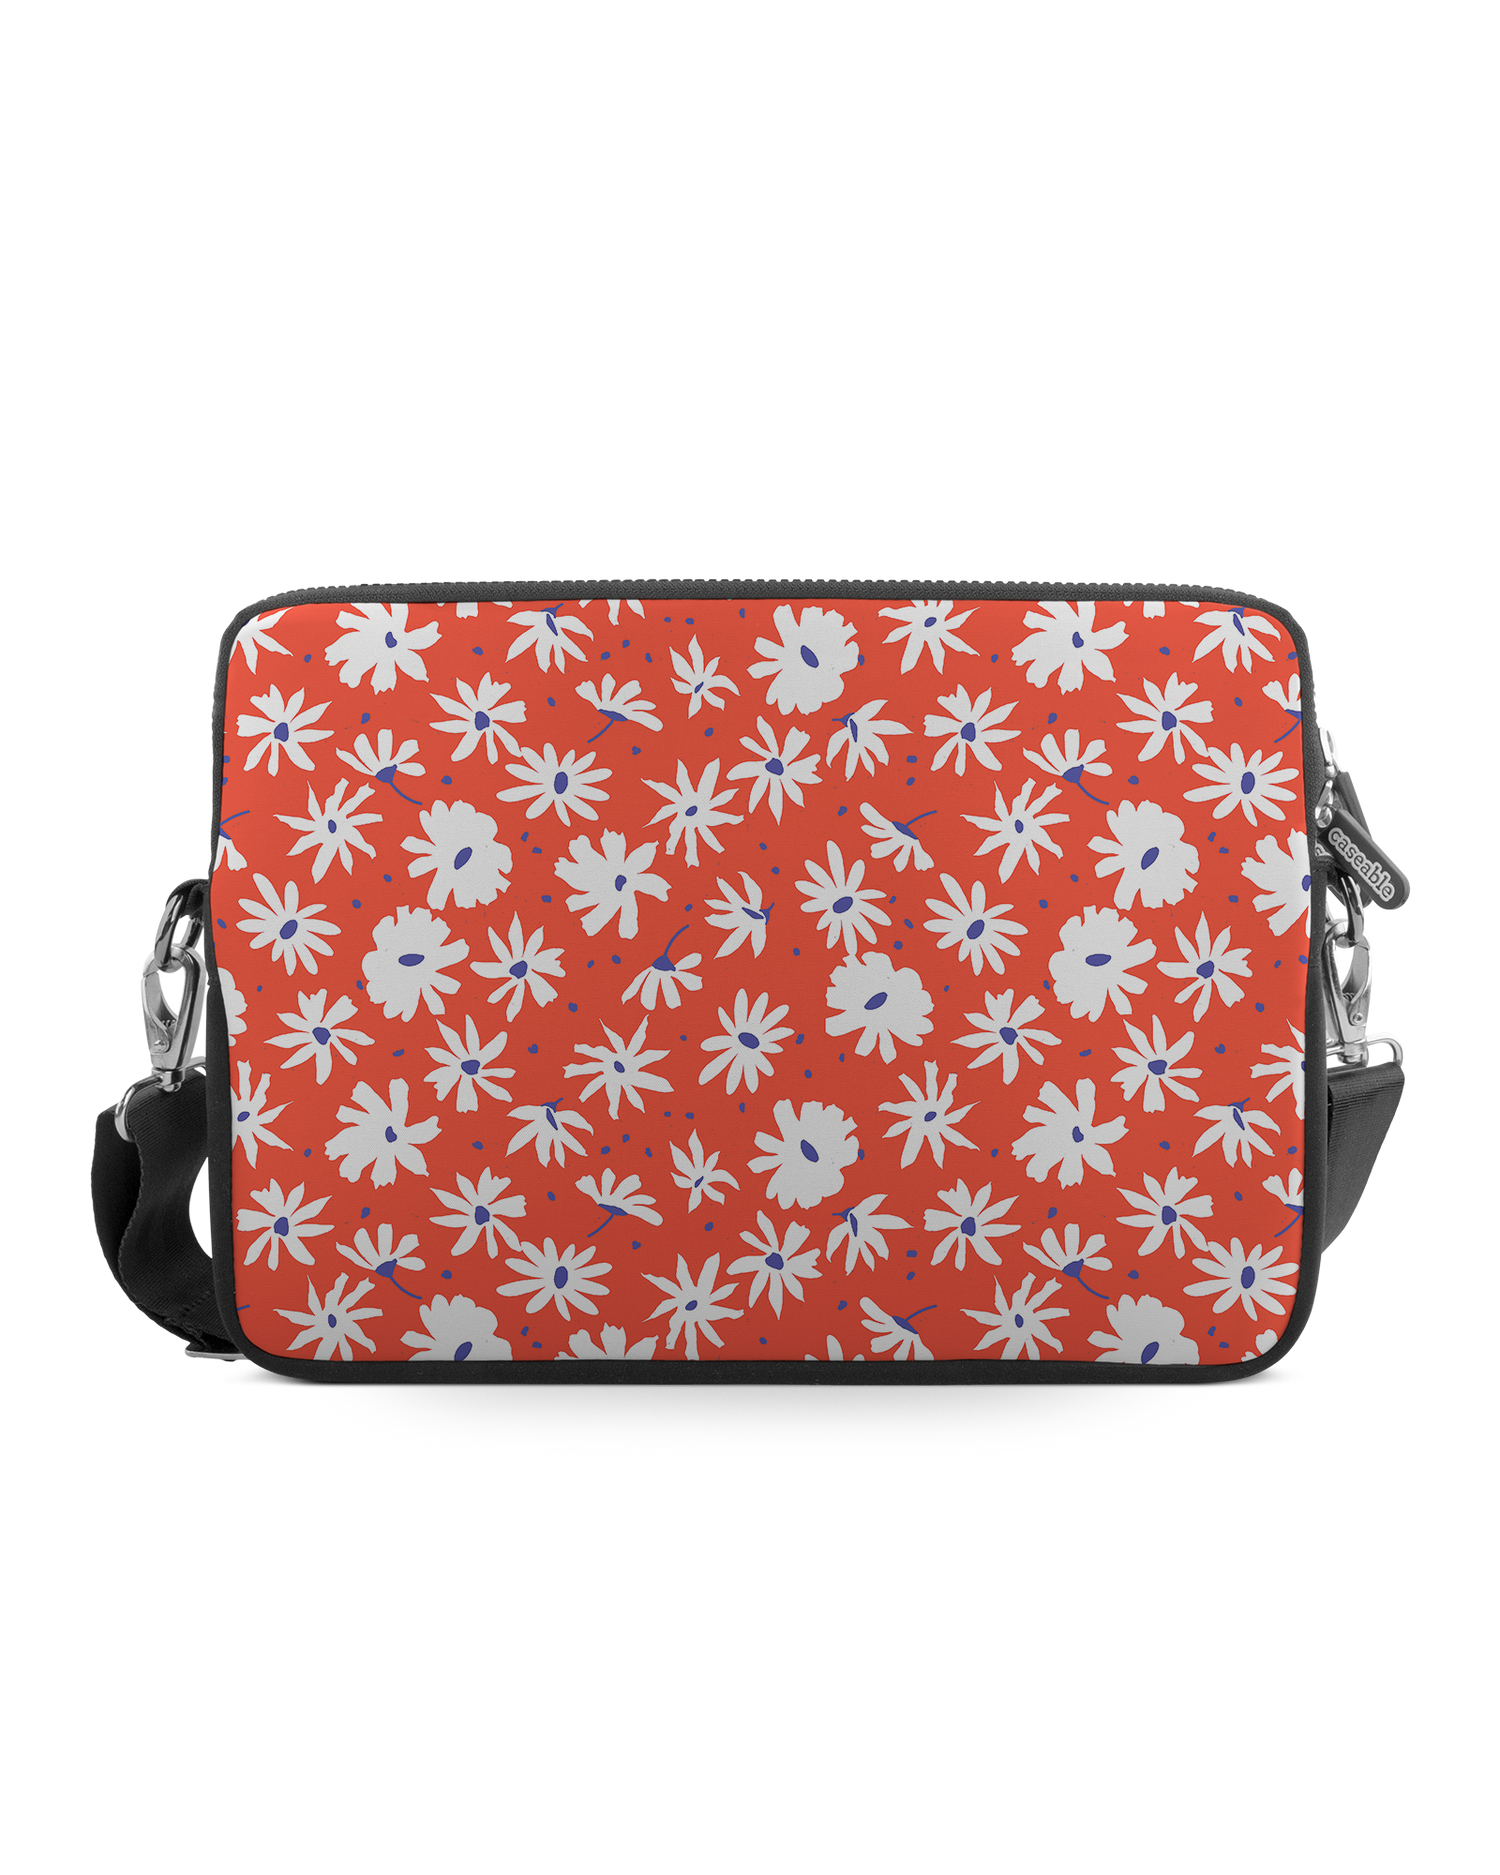 Retro Daisy Premium Laptop Bag 13-14 inch: Front View